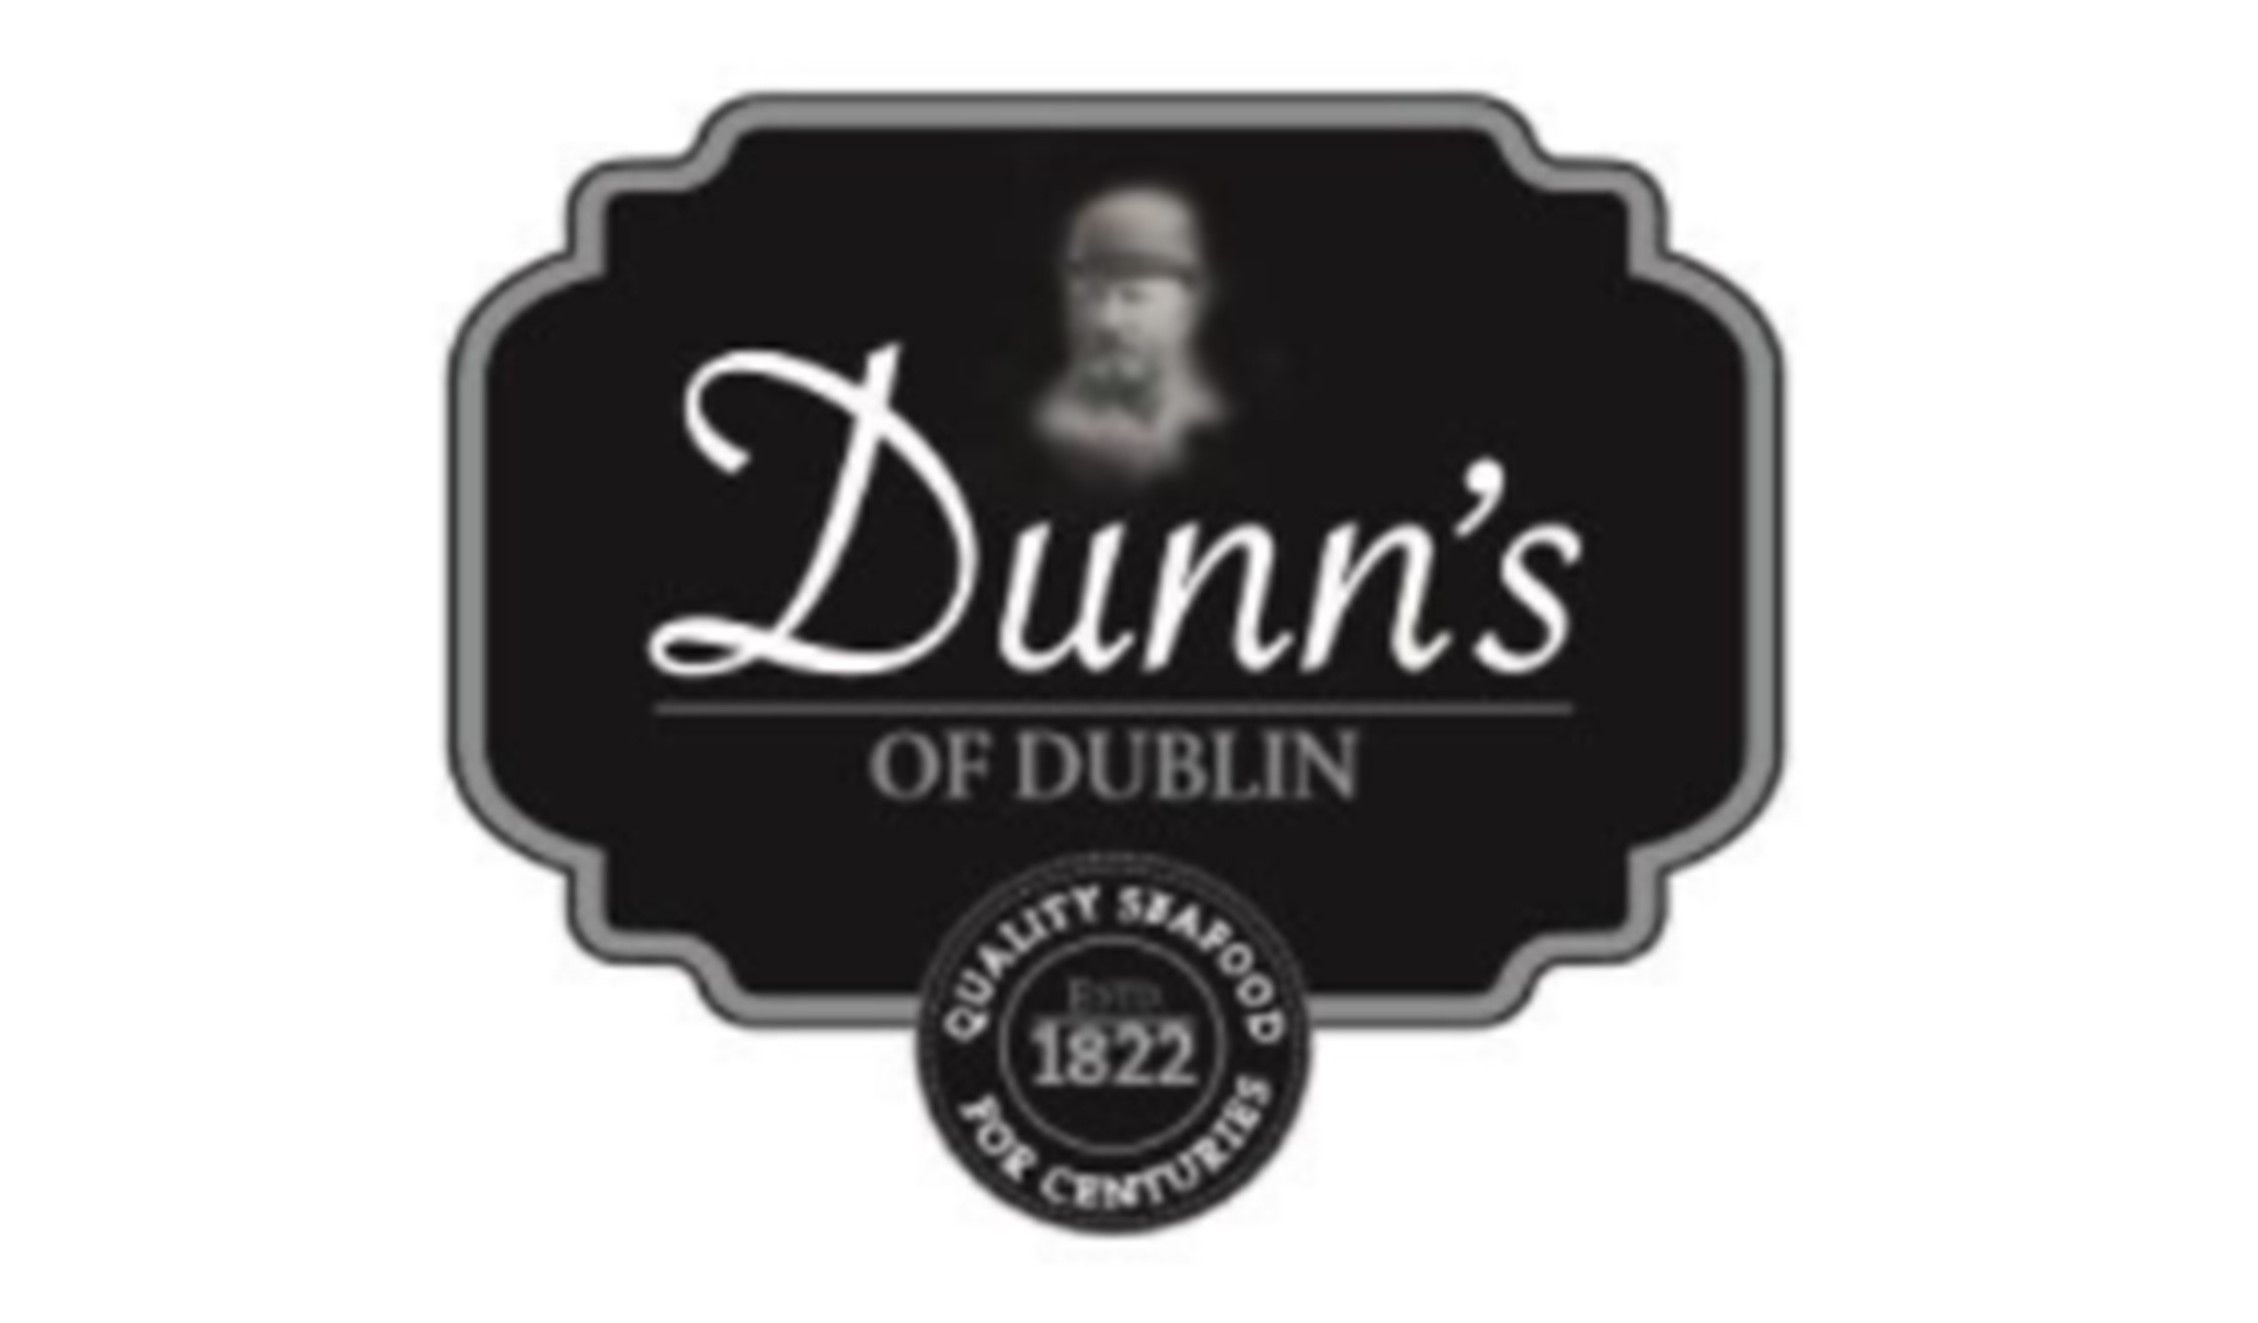 Dunn's of Dublin